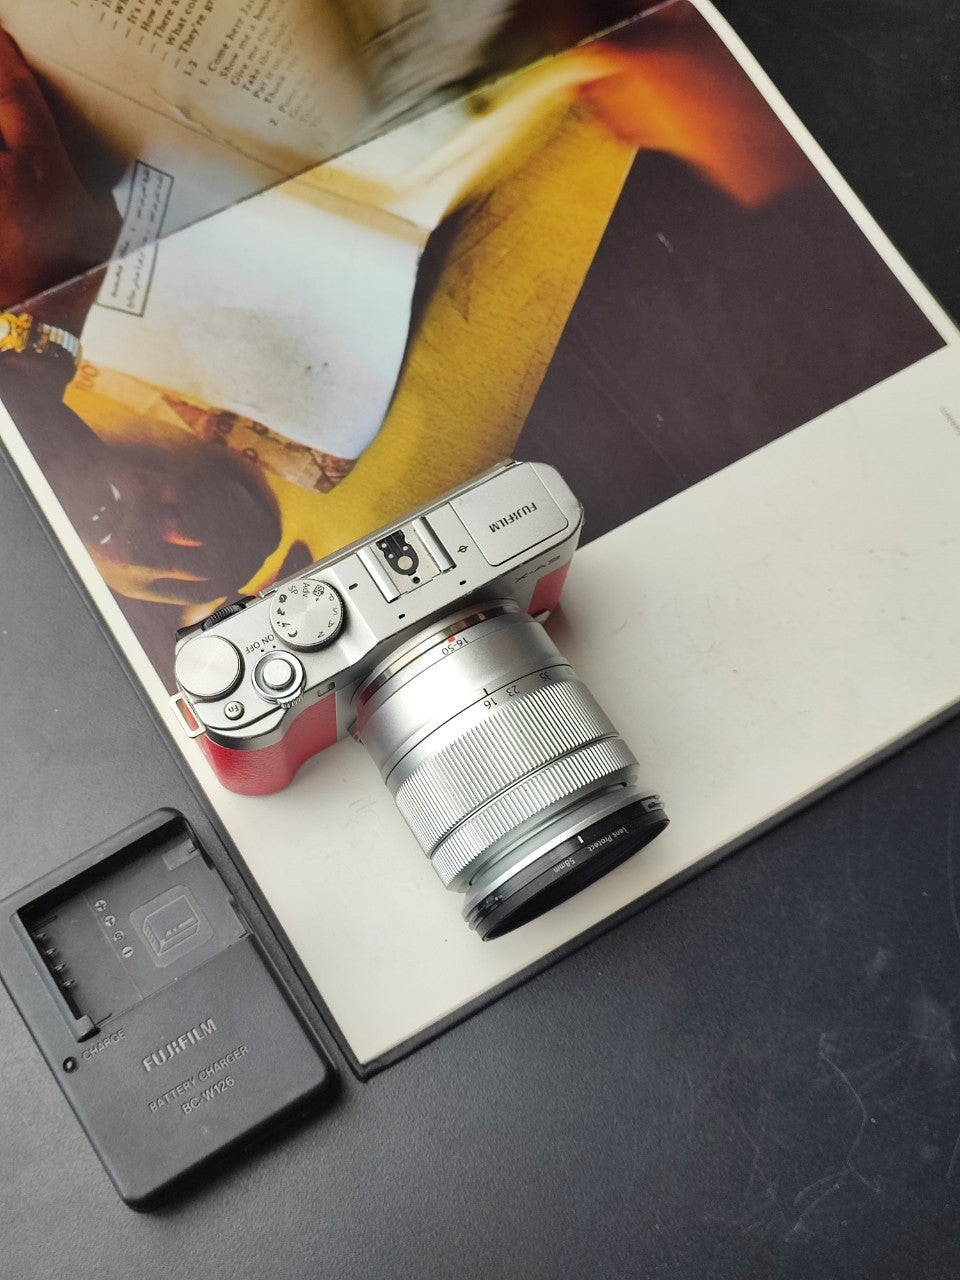 Fujifilm X-A3 Digital Camera with lens